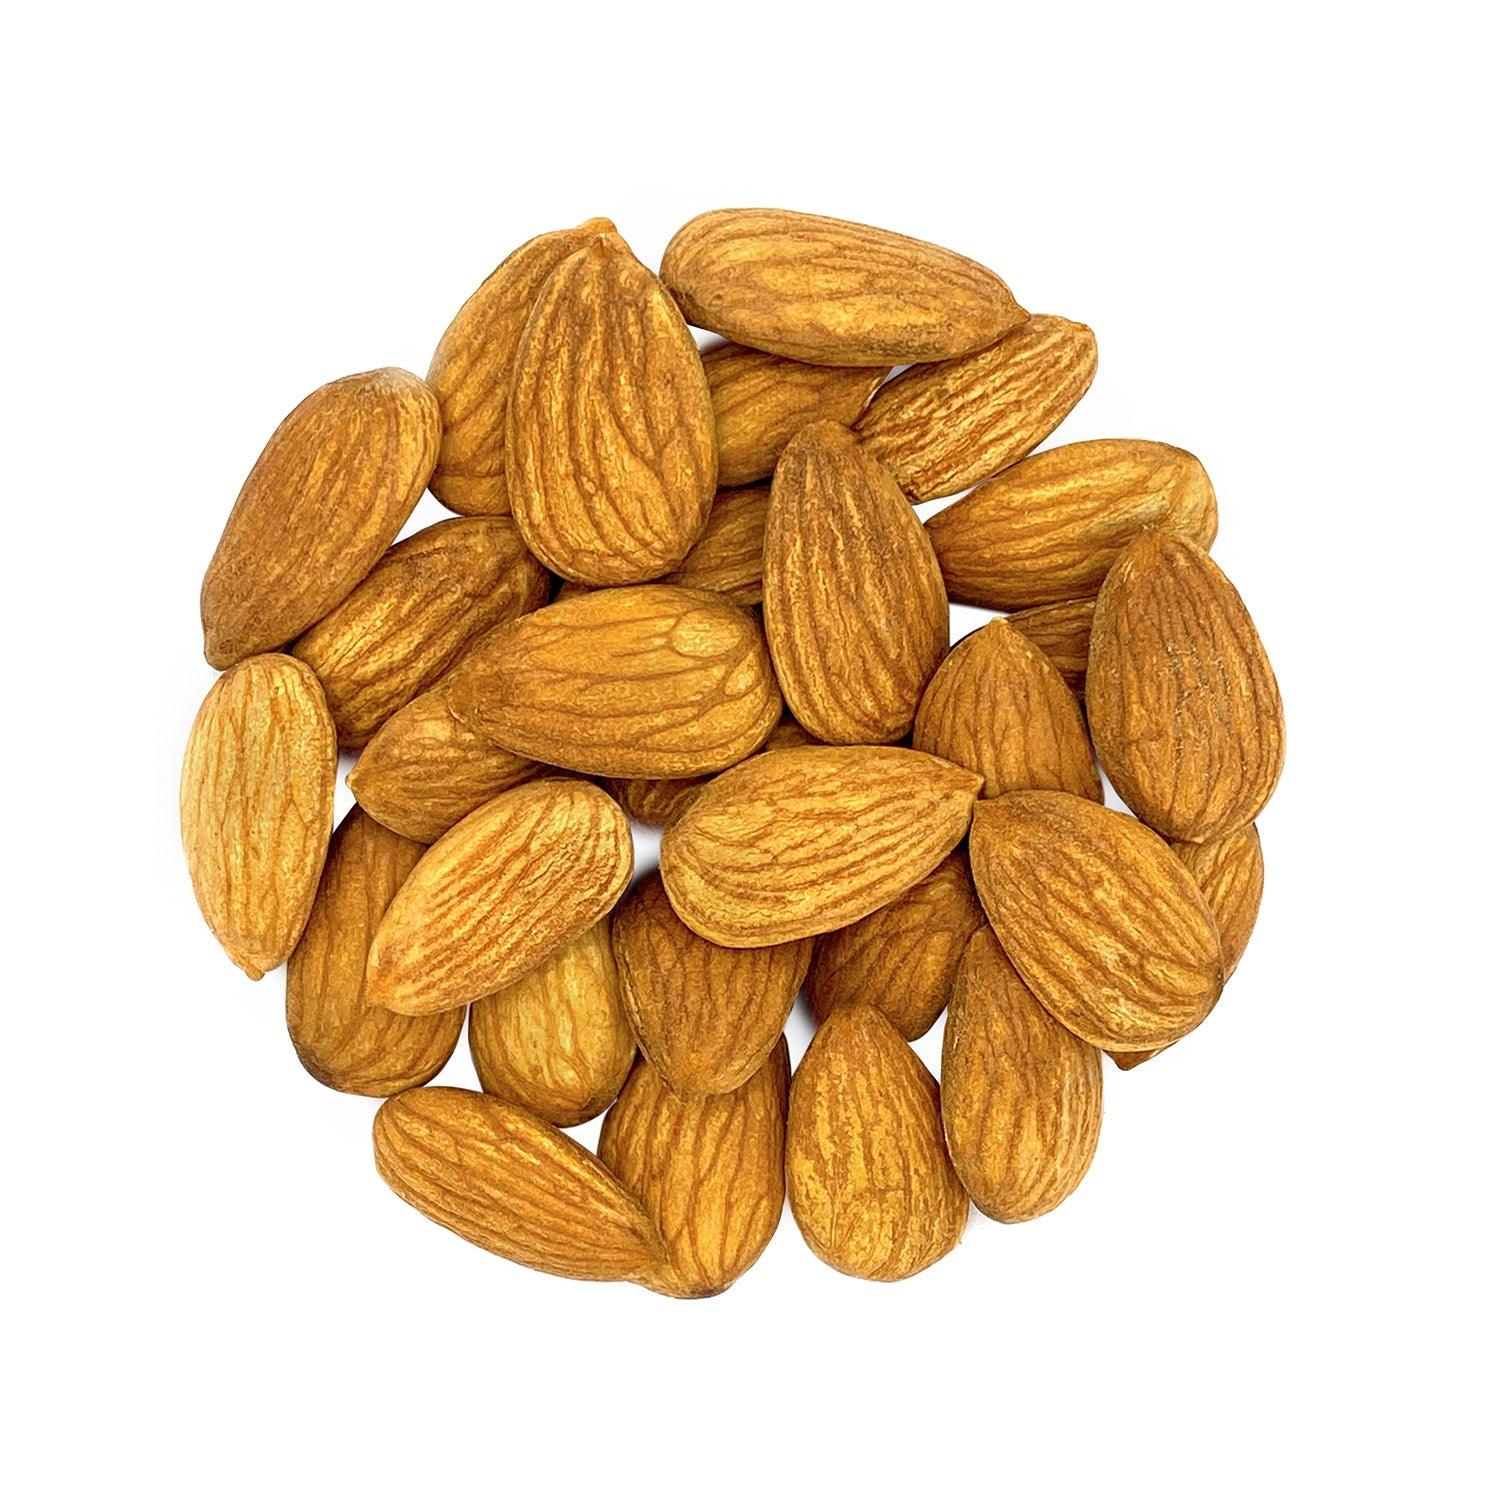 Almond Kernels - Raw Kashmiri Badaam Giri 200g & 800g -Premium Quality Natural & Organic nuts without Shell - No Additives or Preservatives. - Satopradhan